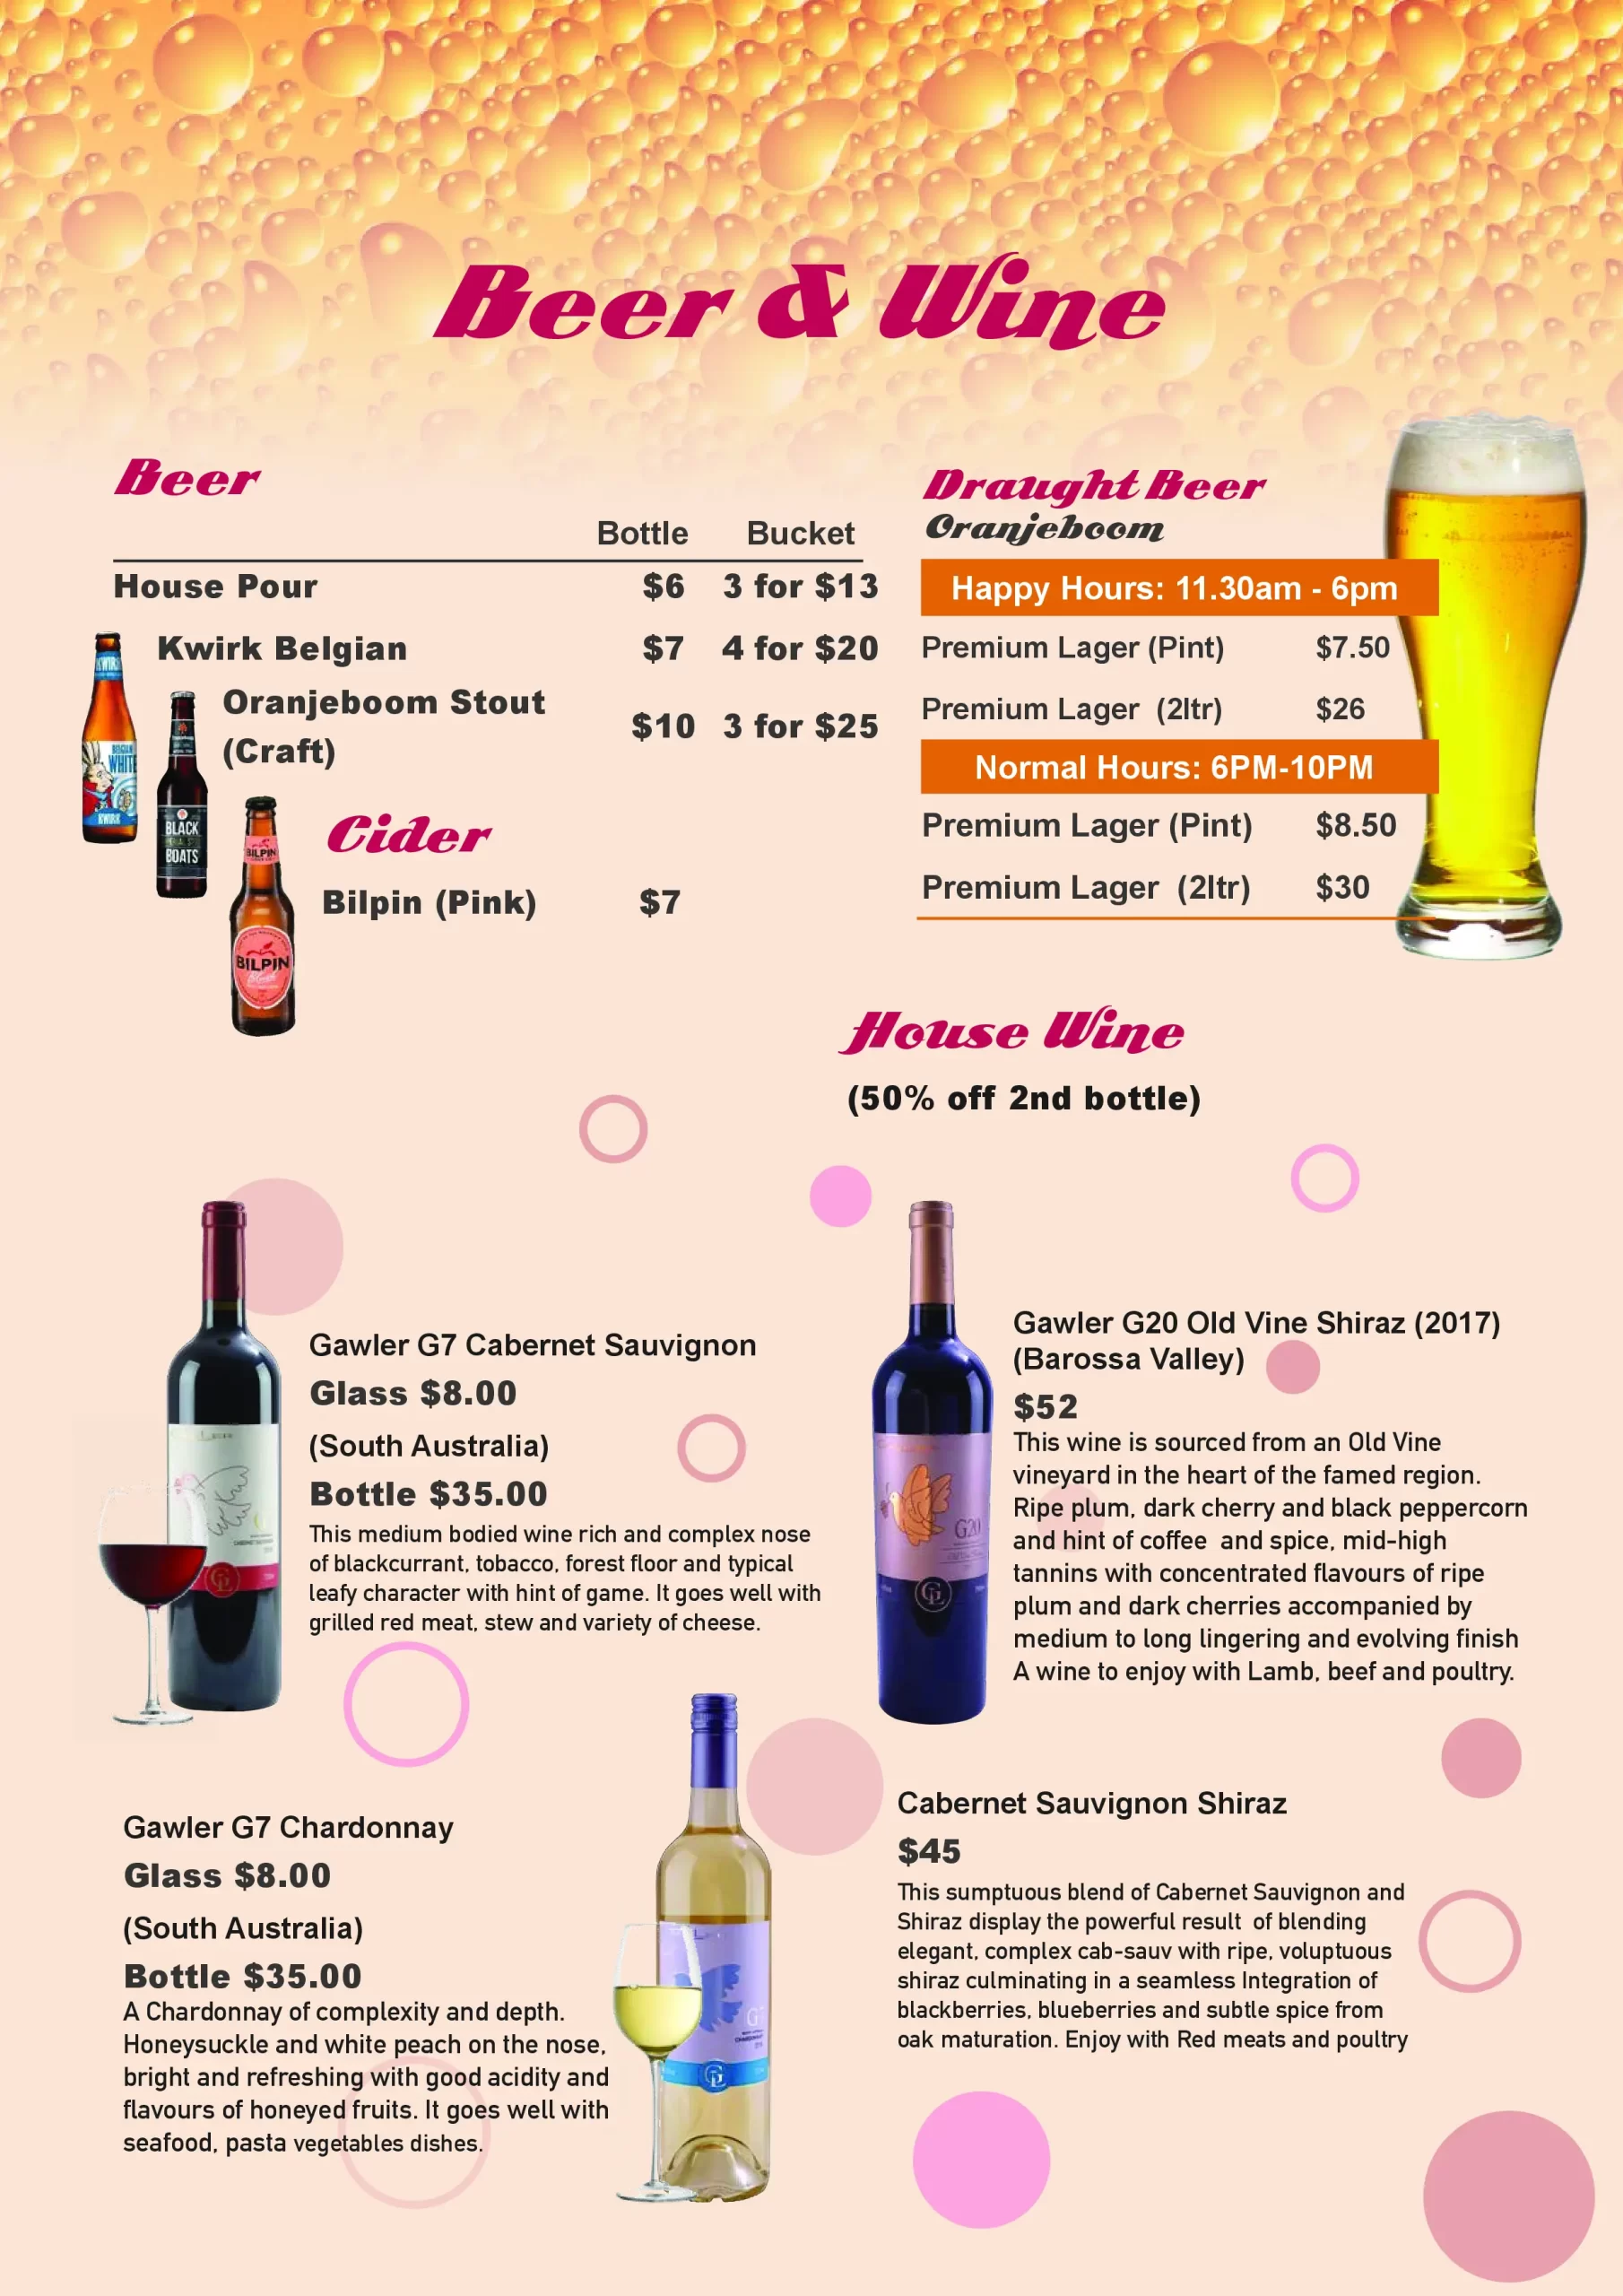 Tim’s Restaurant Singapore beer wine house wine Menu & Price List 2022